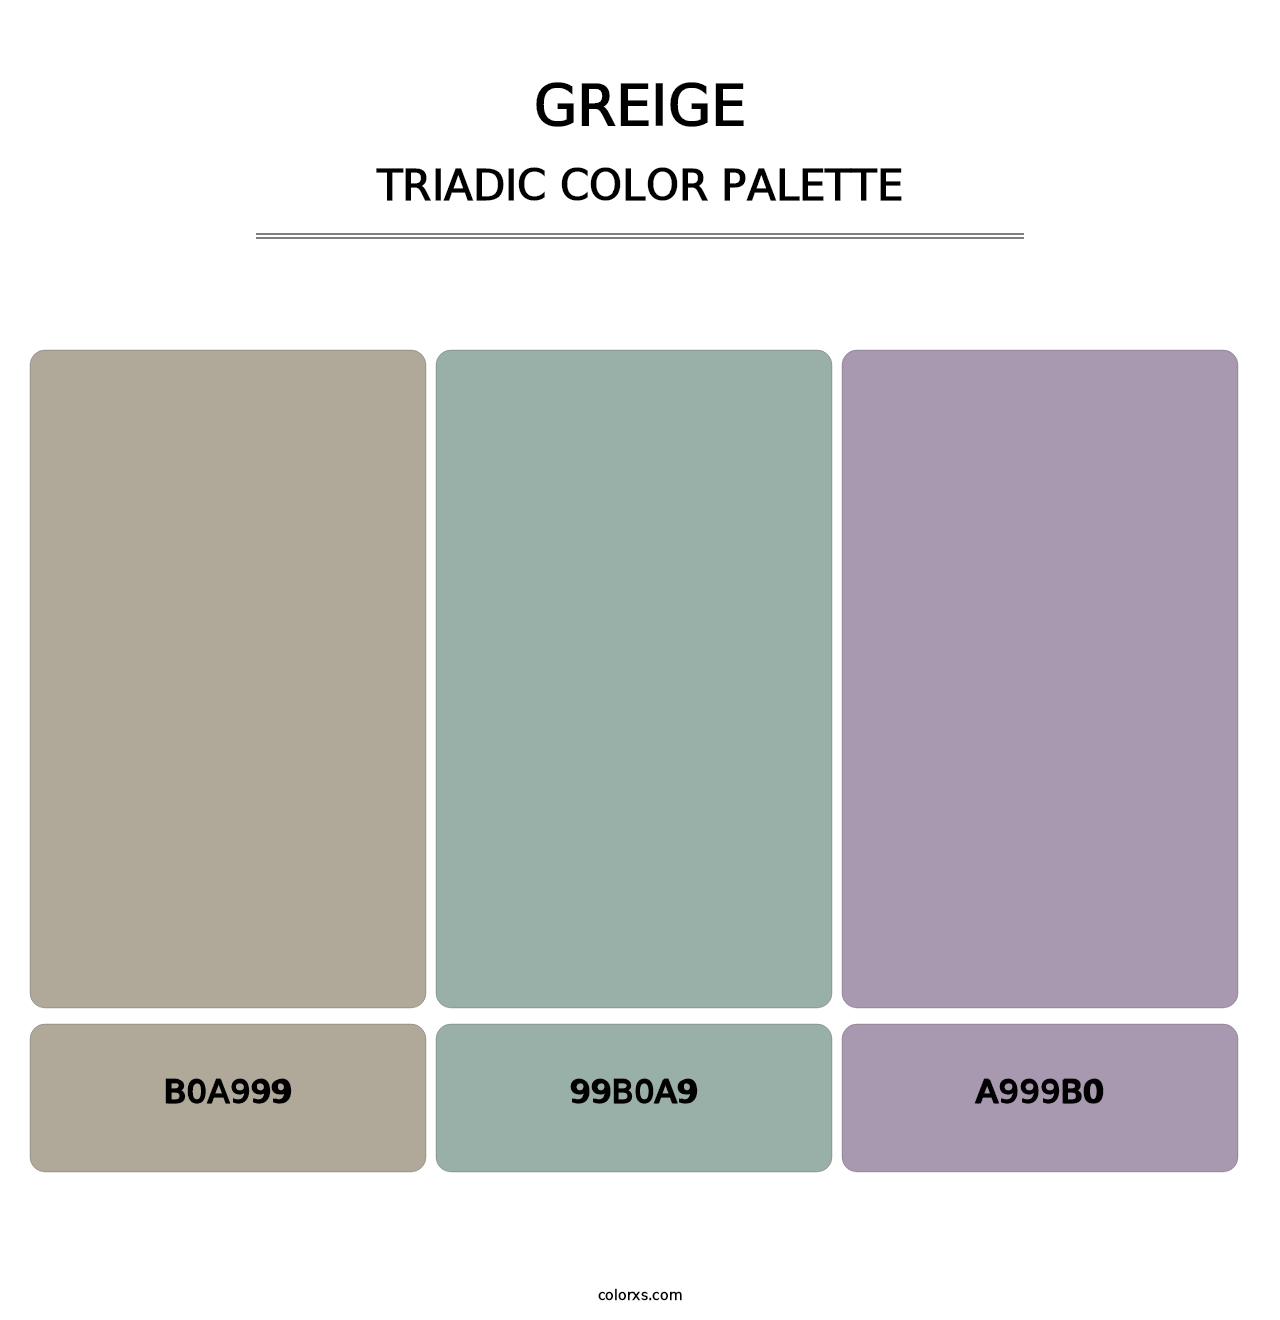 Greige - Triadic Color Palette